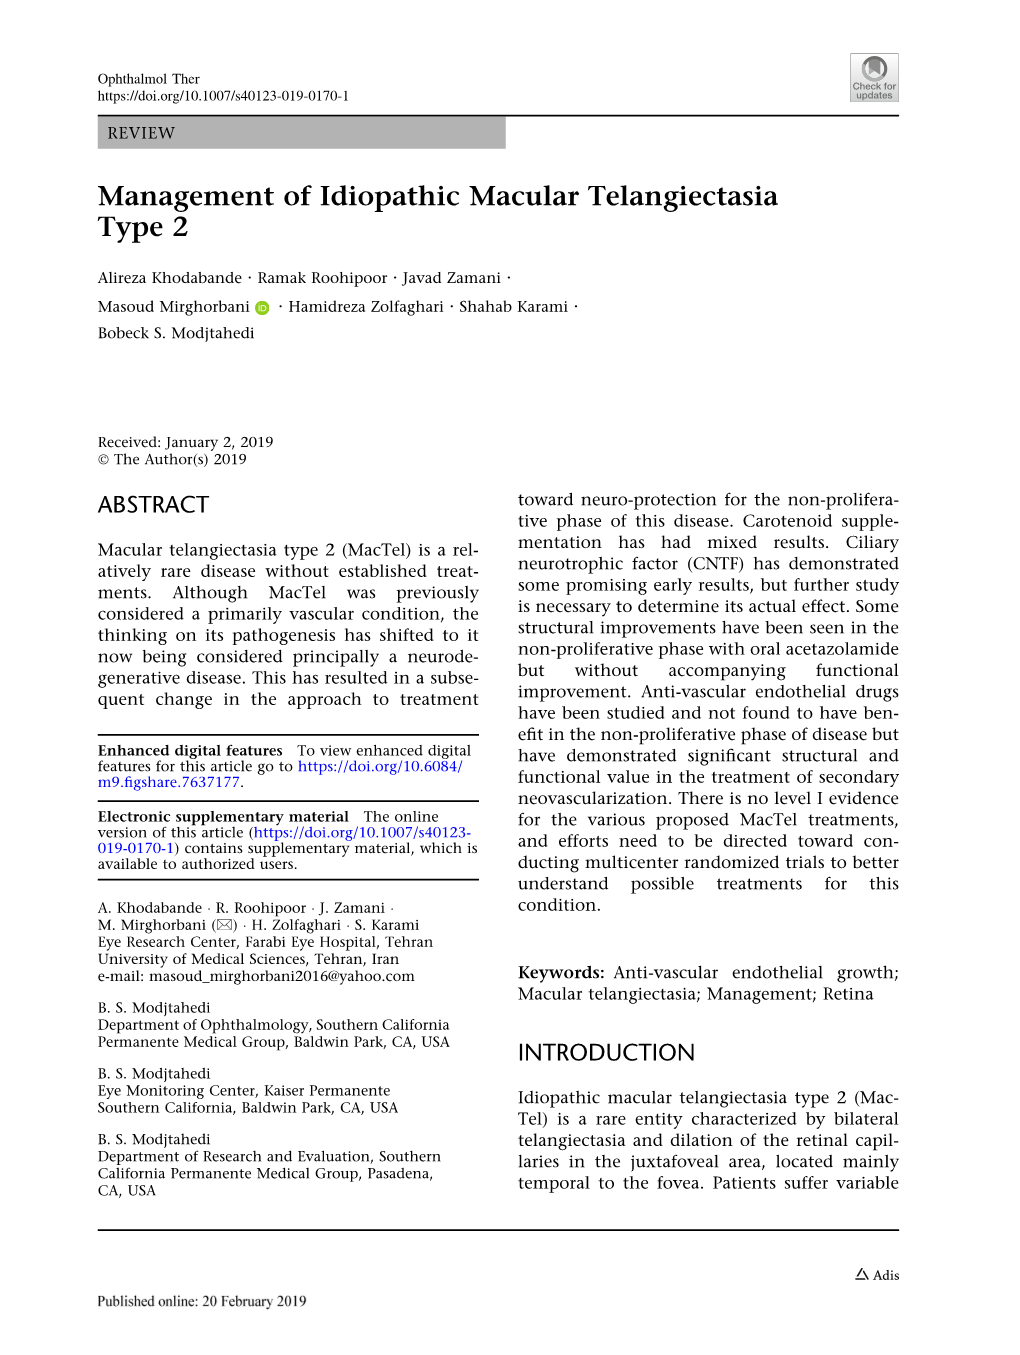 Management of Idiopathic Macular Telangiectasia Type 2